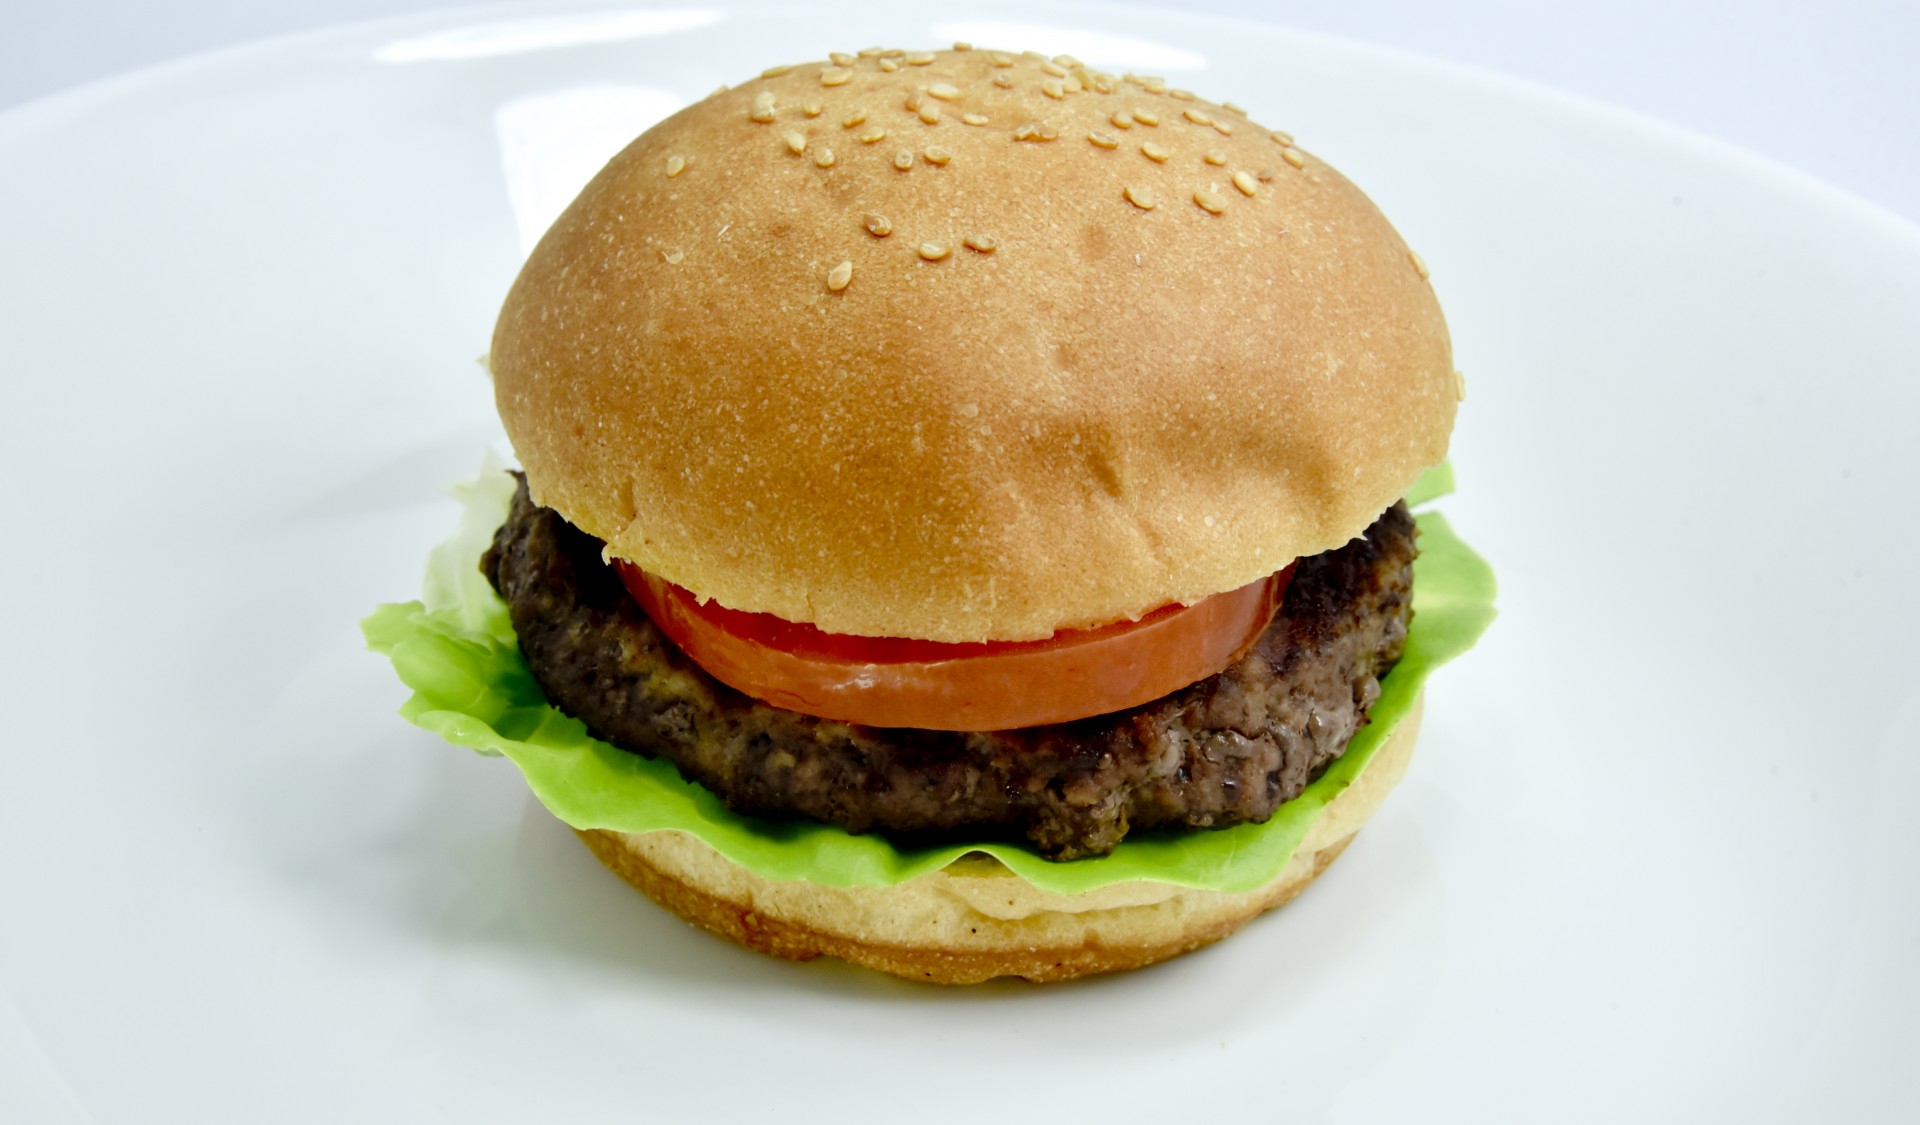 Juicy hamburger with Lettuce tomato and sesame bun